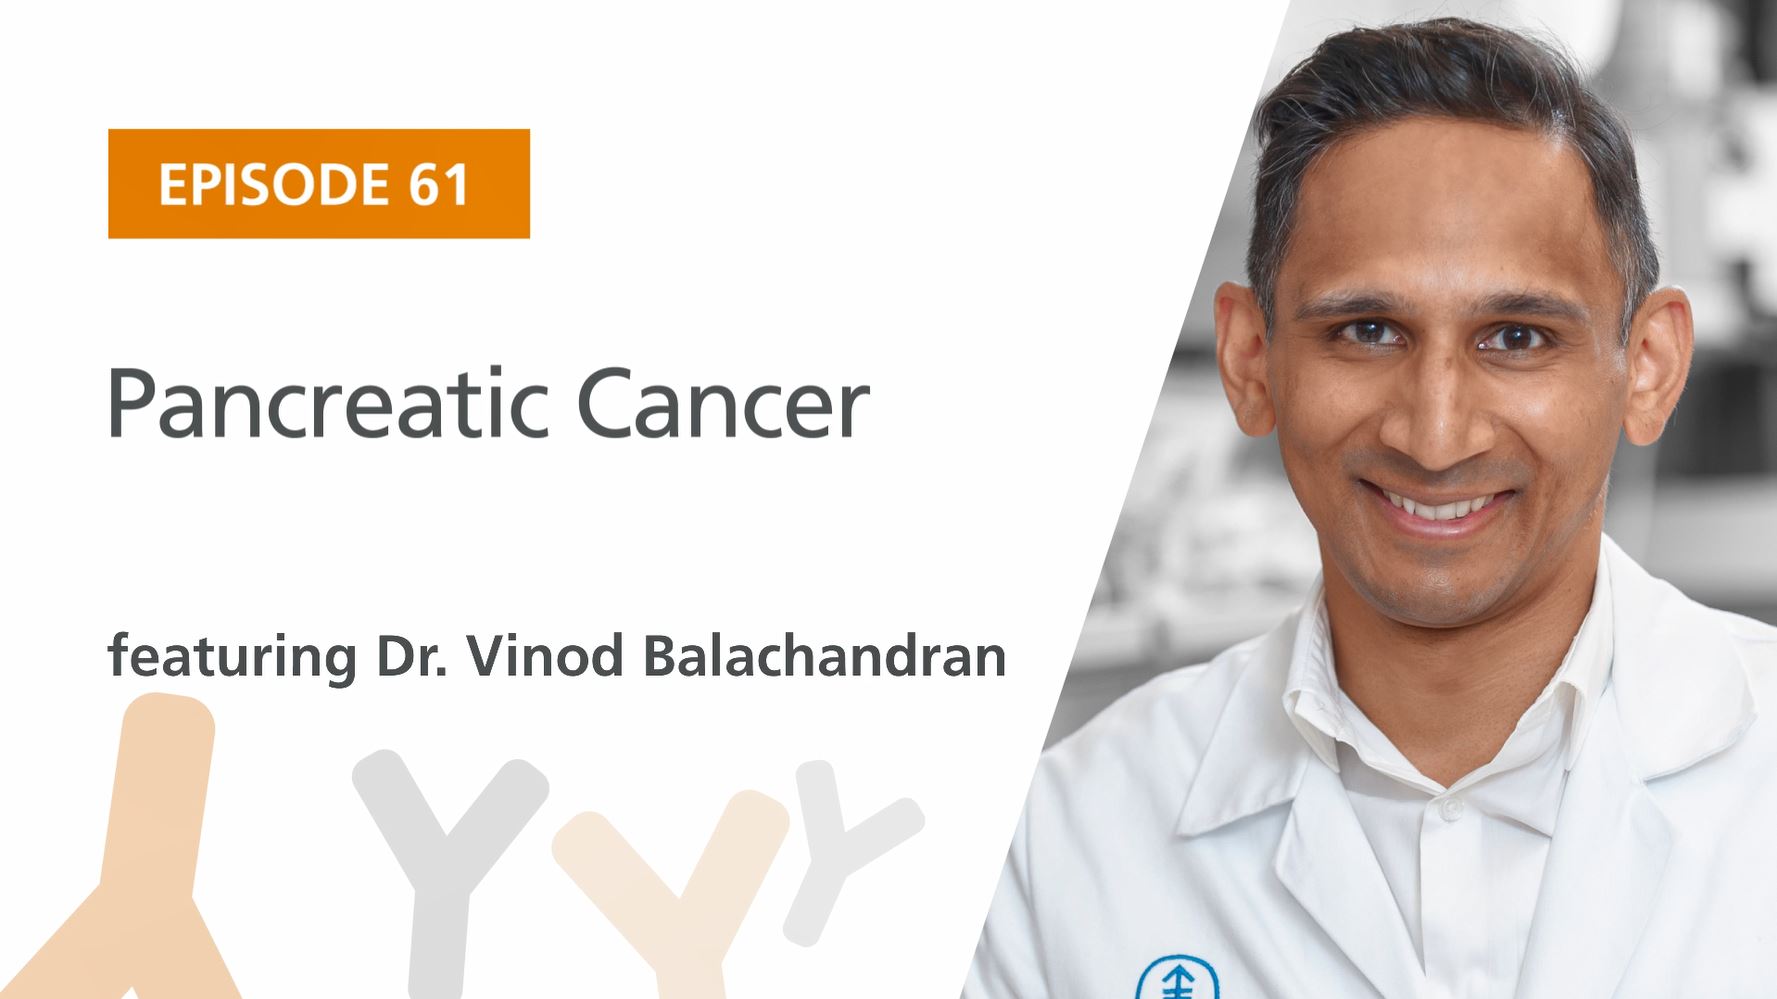 Pancreatic Cancer Featuring Vinod Balachandran